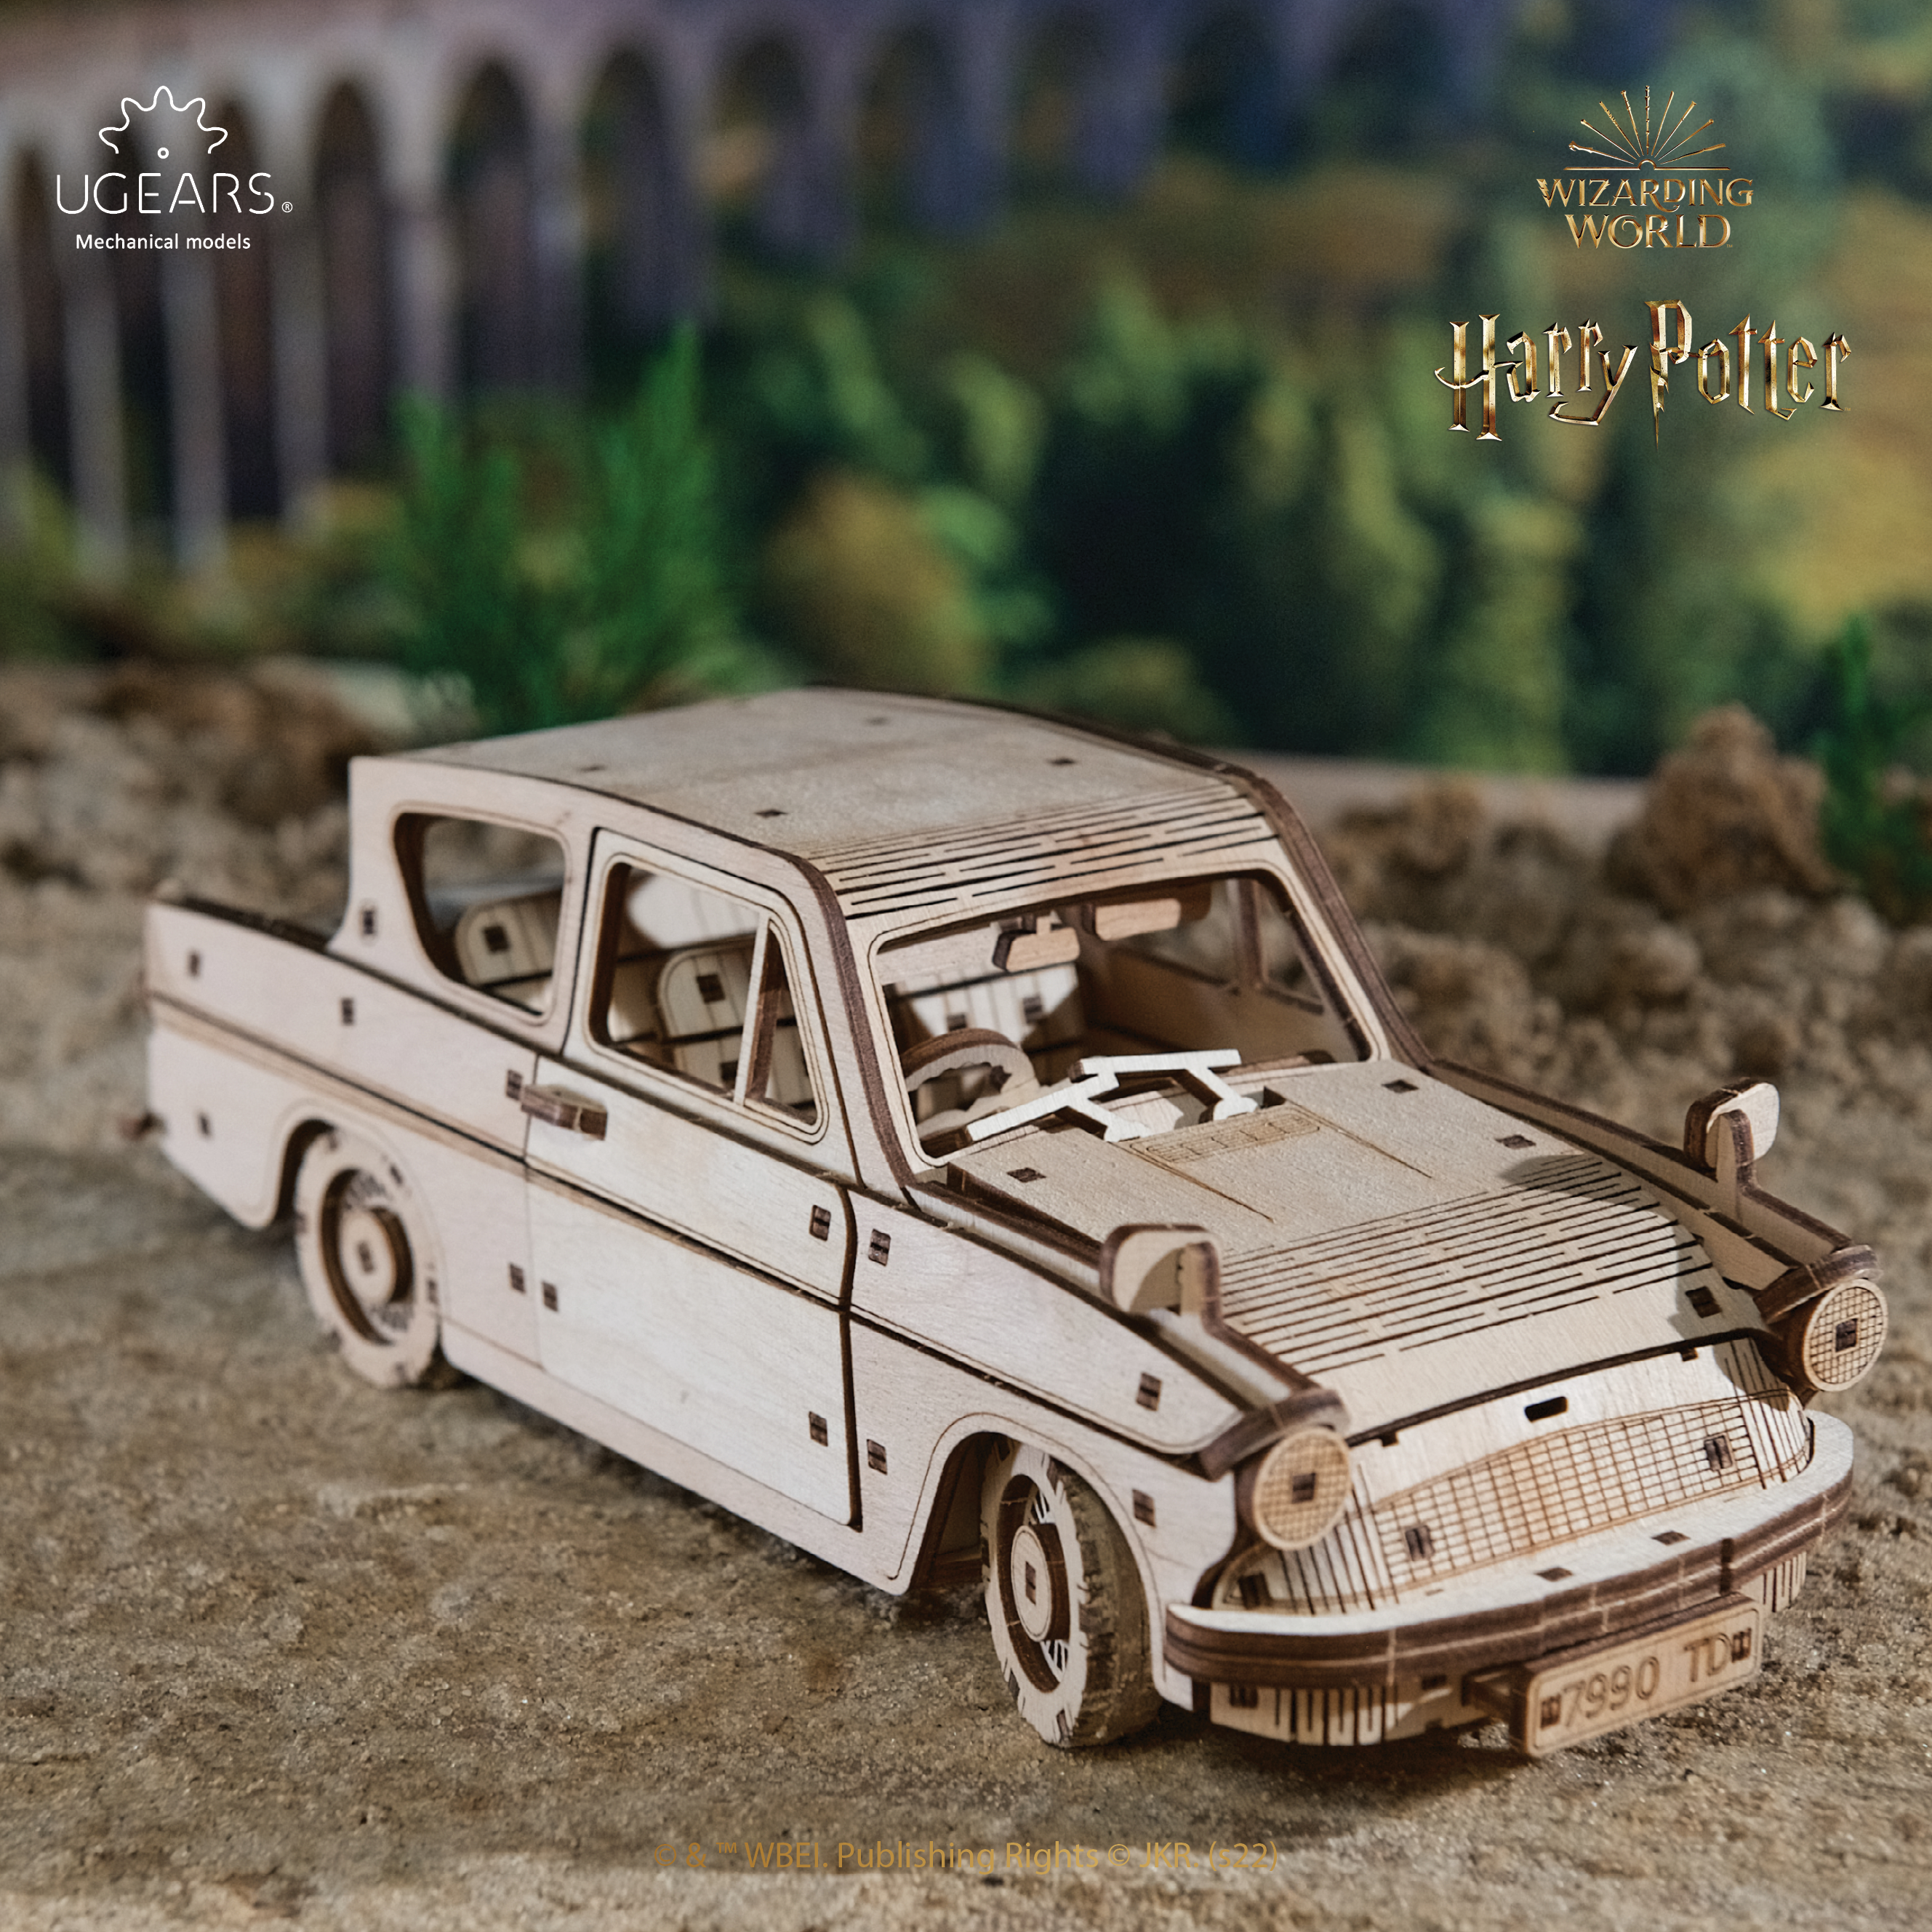 La Ford Anglia dans l'univers d'Harry Potter